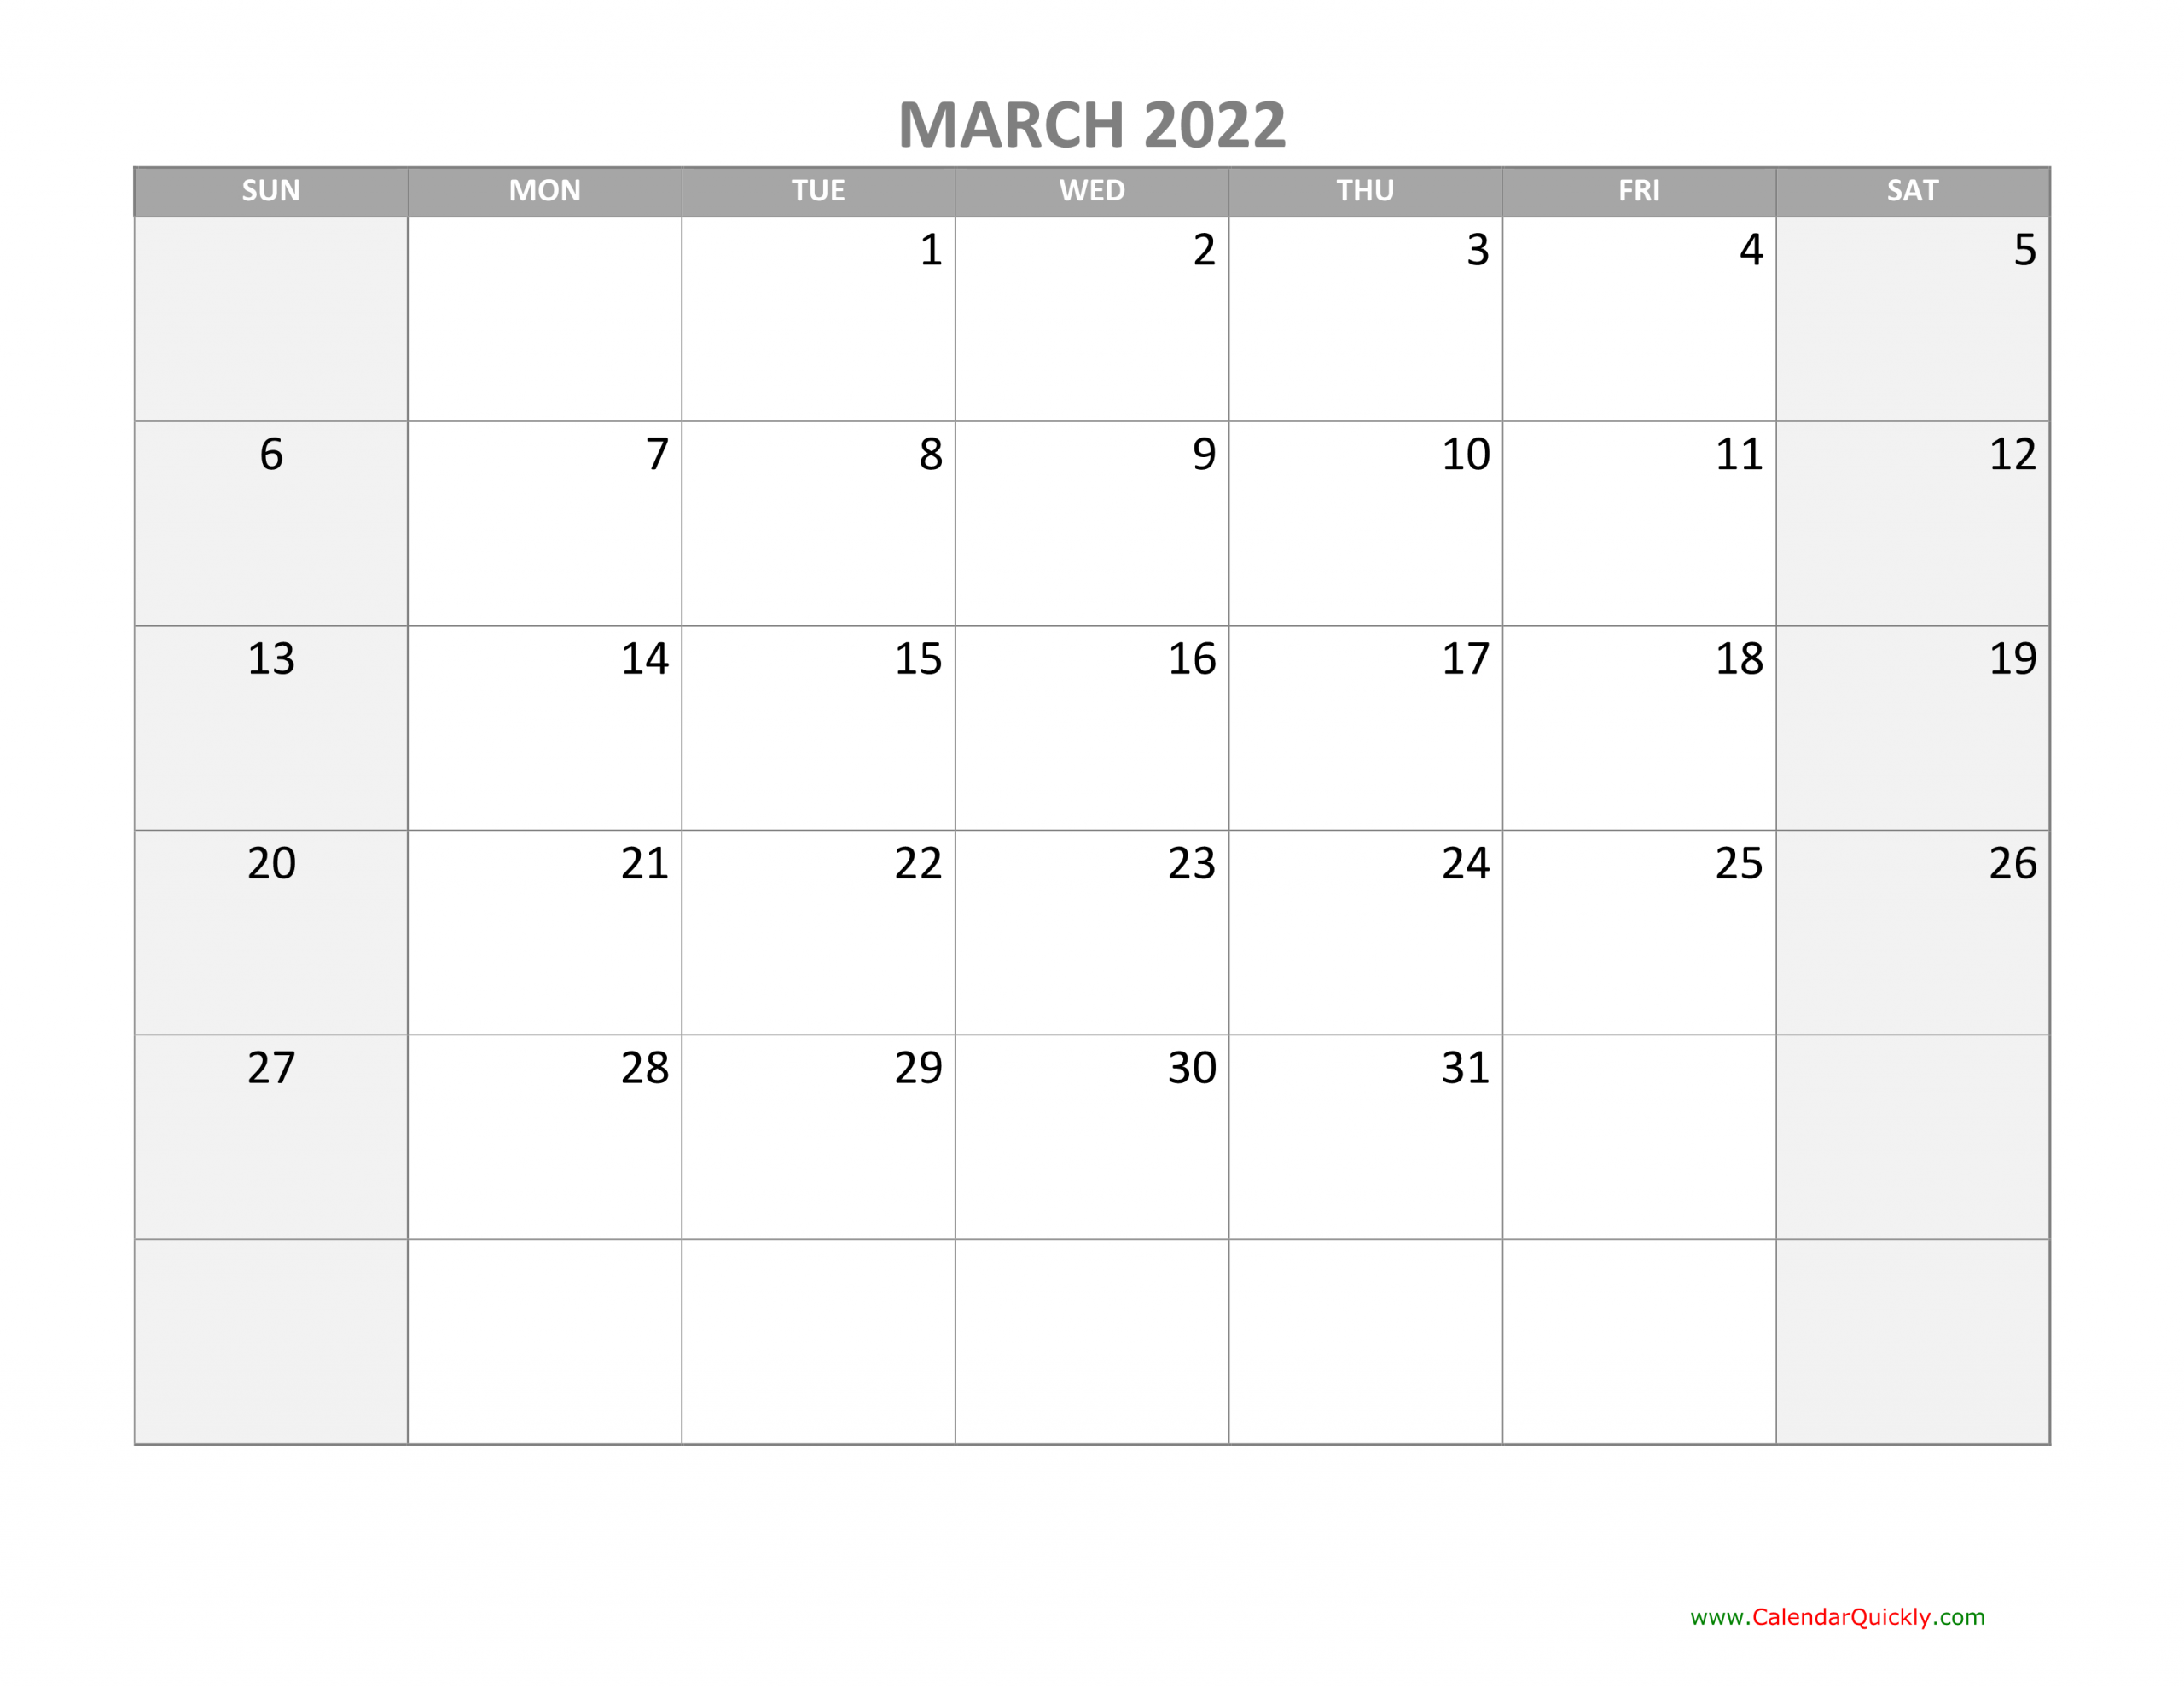 march calendar 2022 with holidays calendar quickly